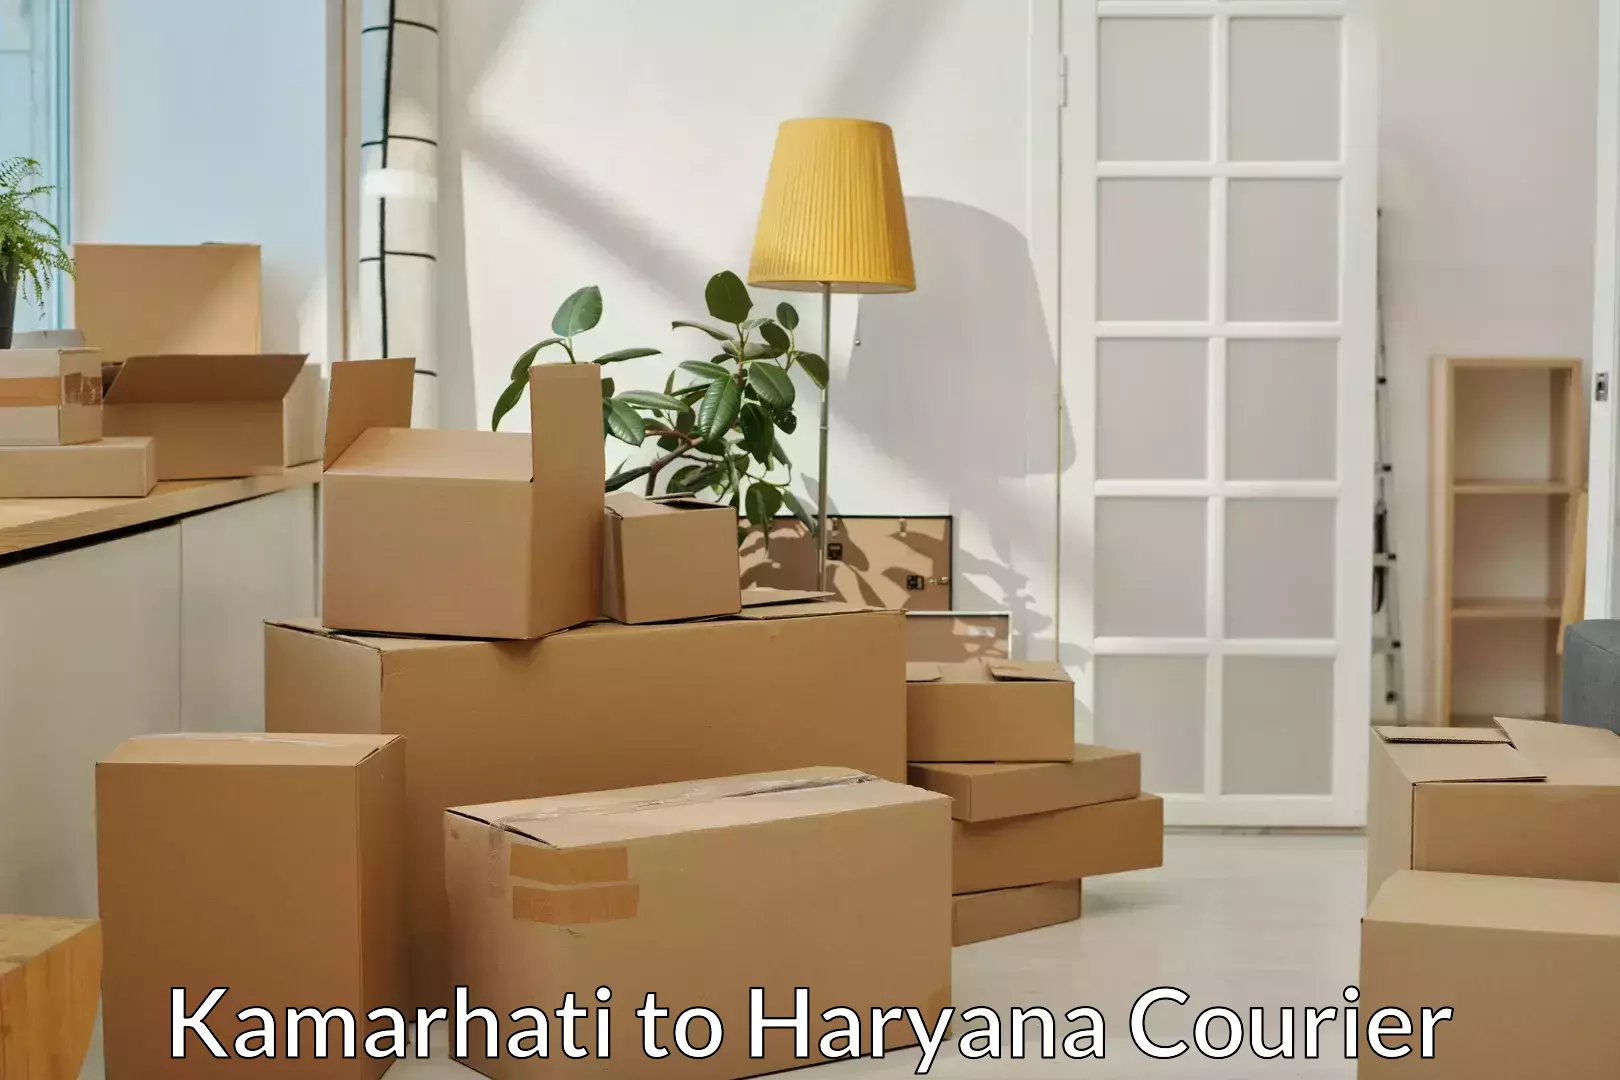 Professional moving company Kamarhati to Haryana